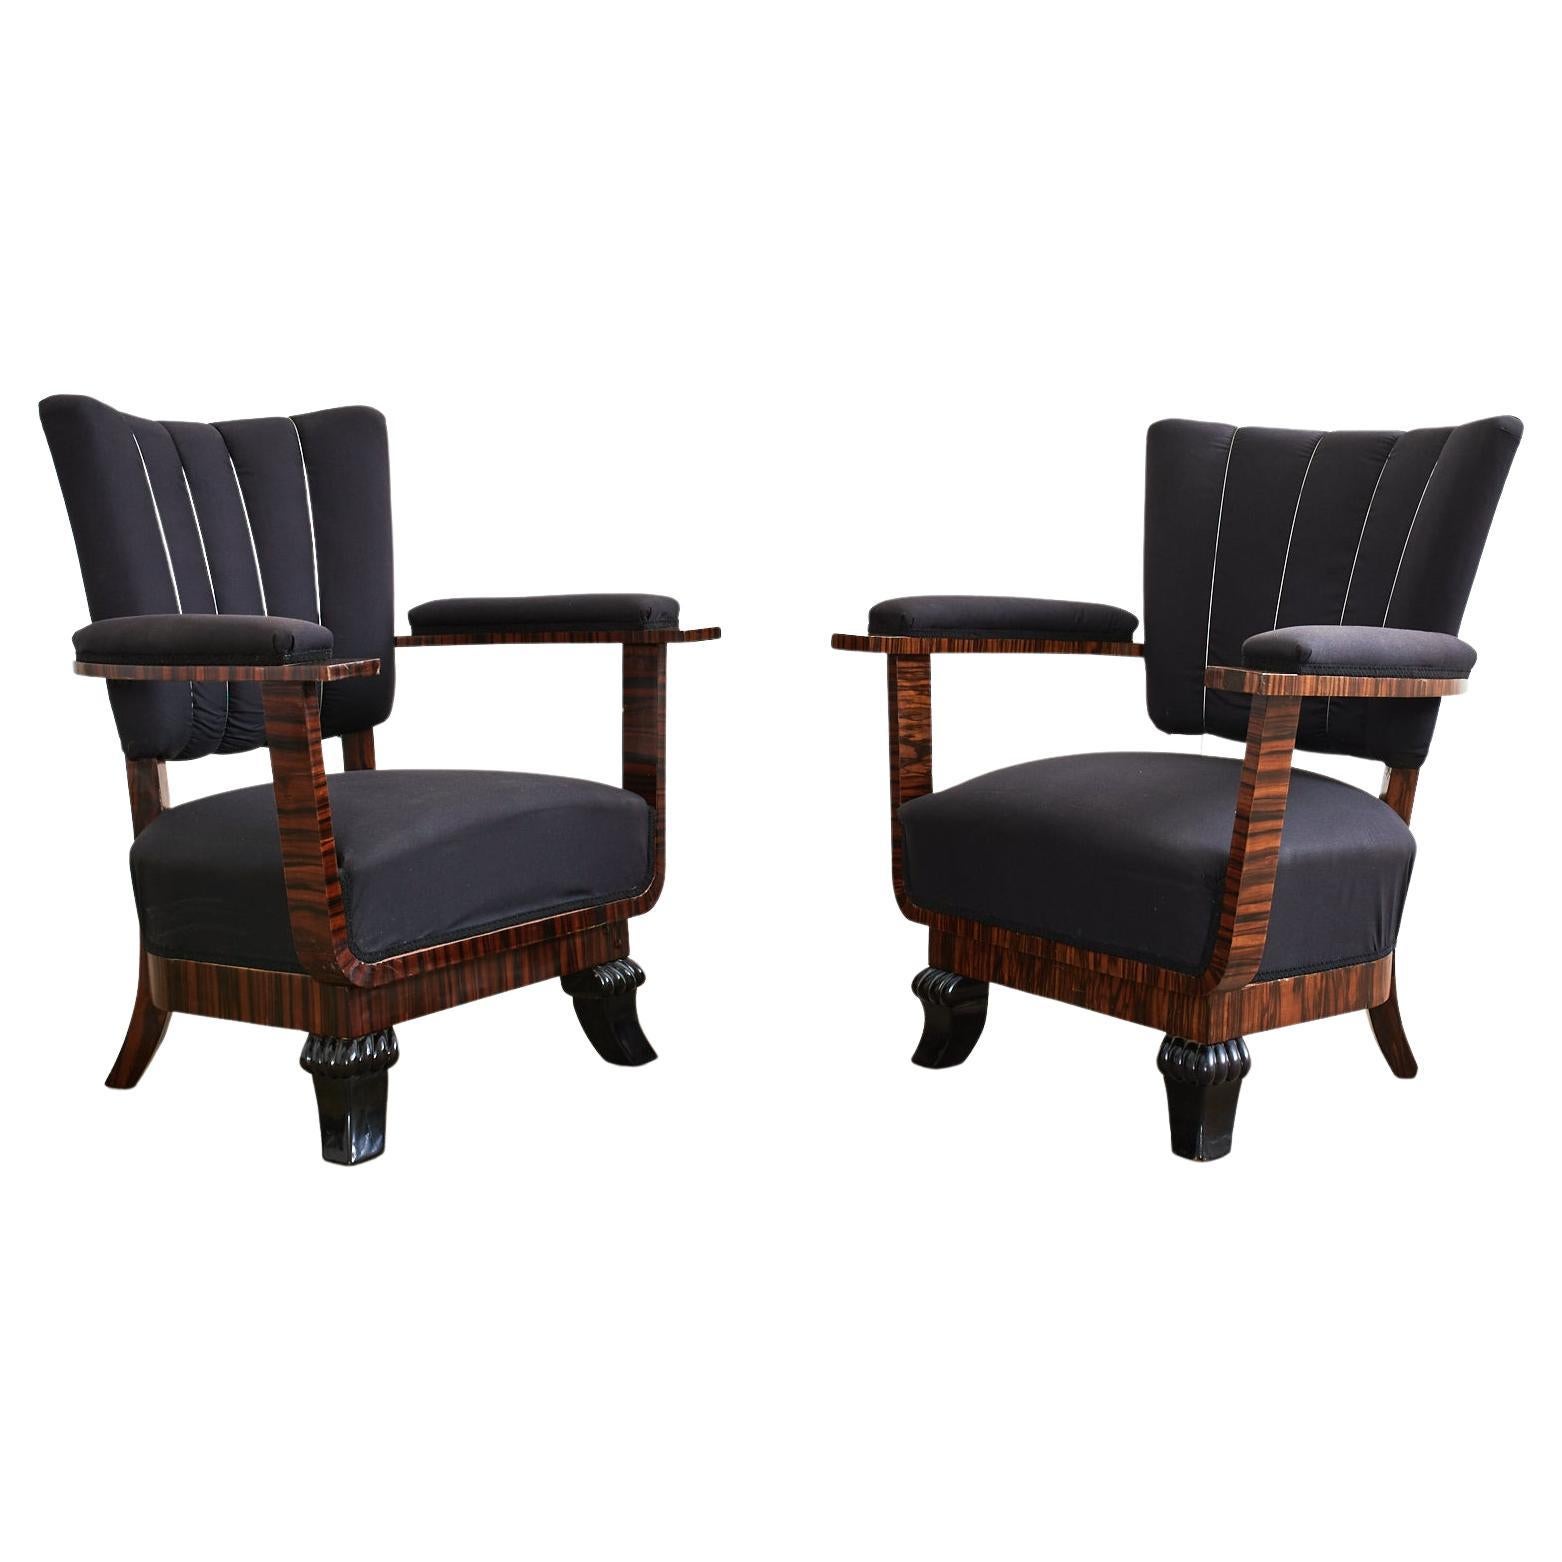 Pair of French Art Deco Macassar Club Chairs